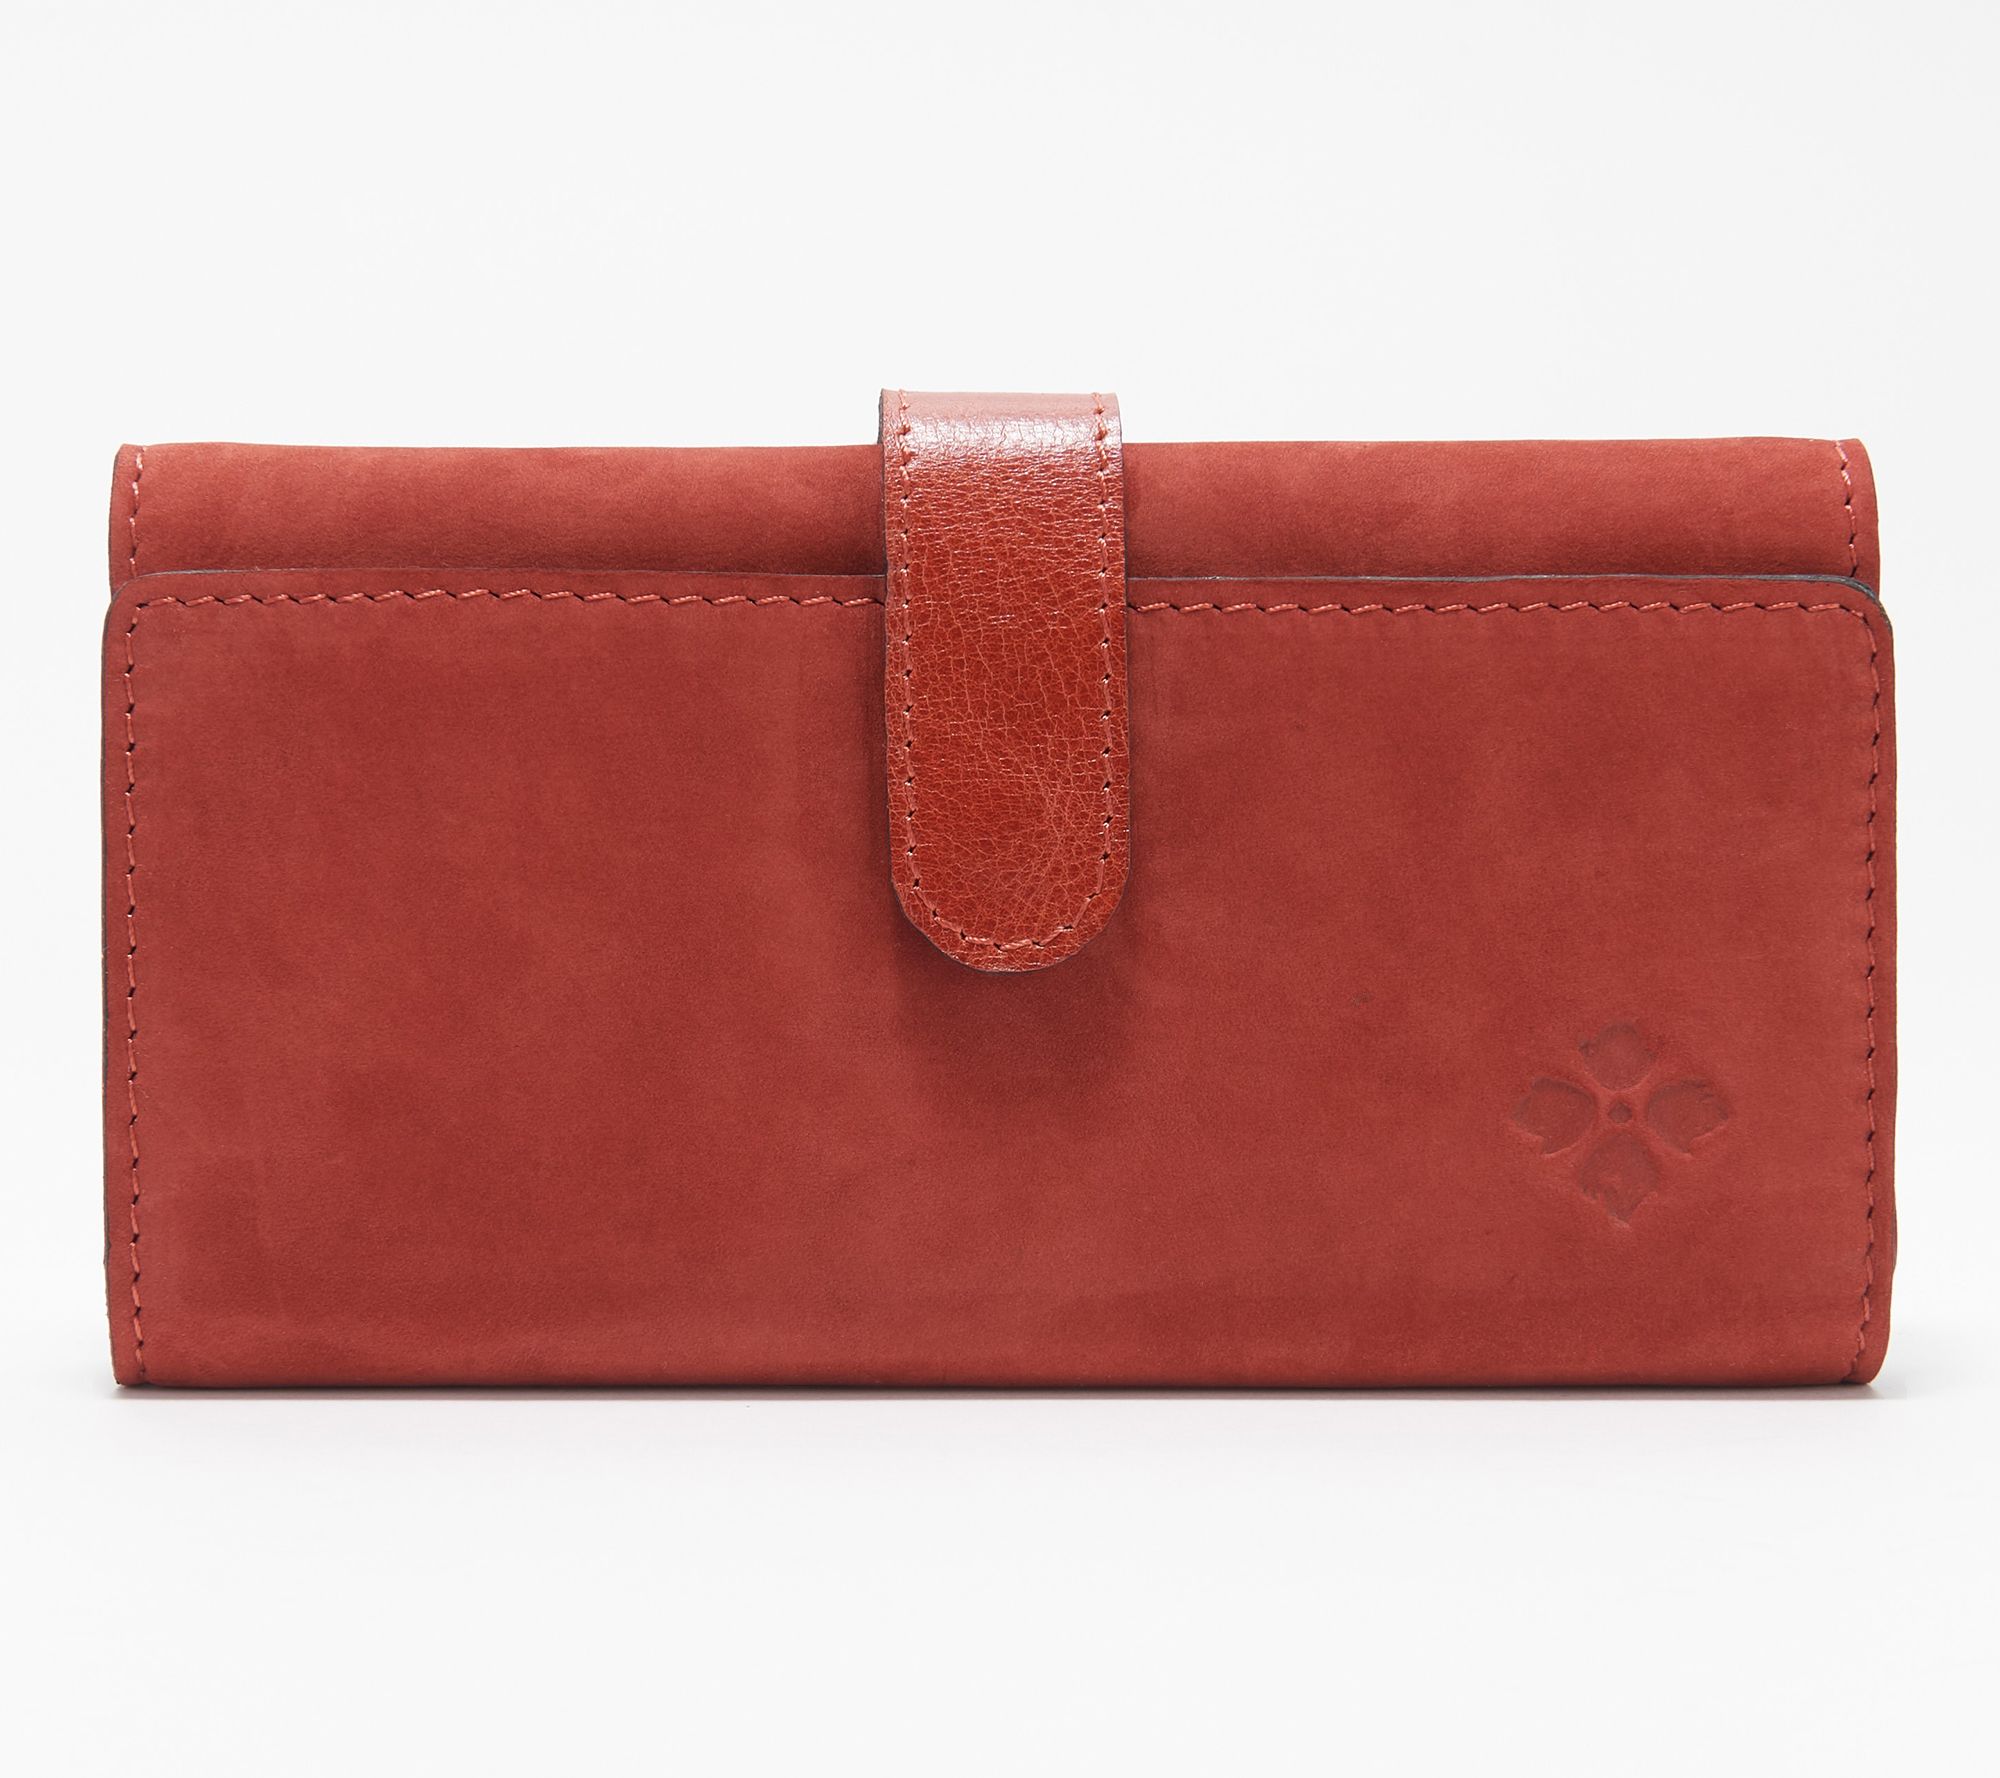 Kingdom Hearts Brown purse wallet money card bags billfold cool bag new